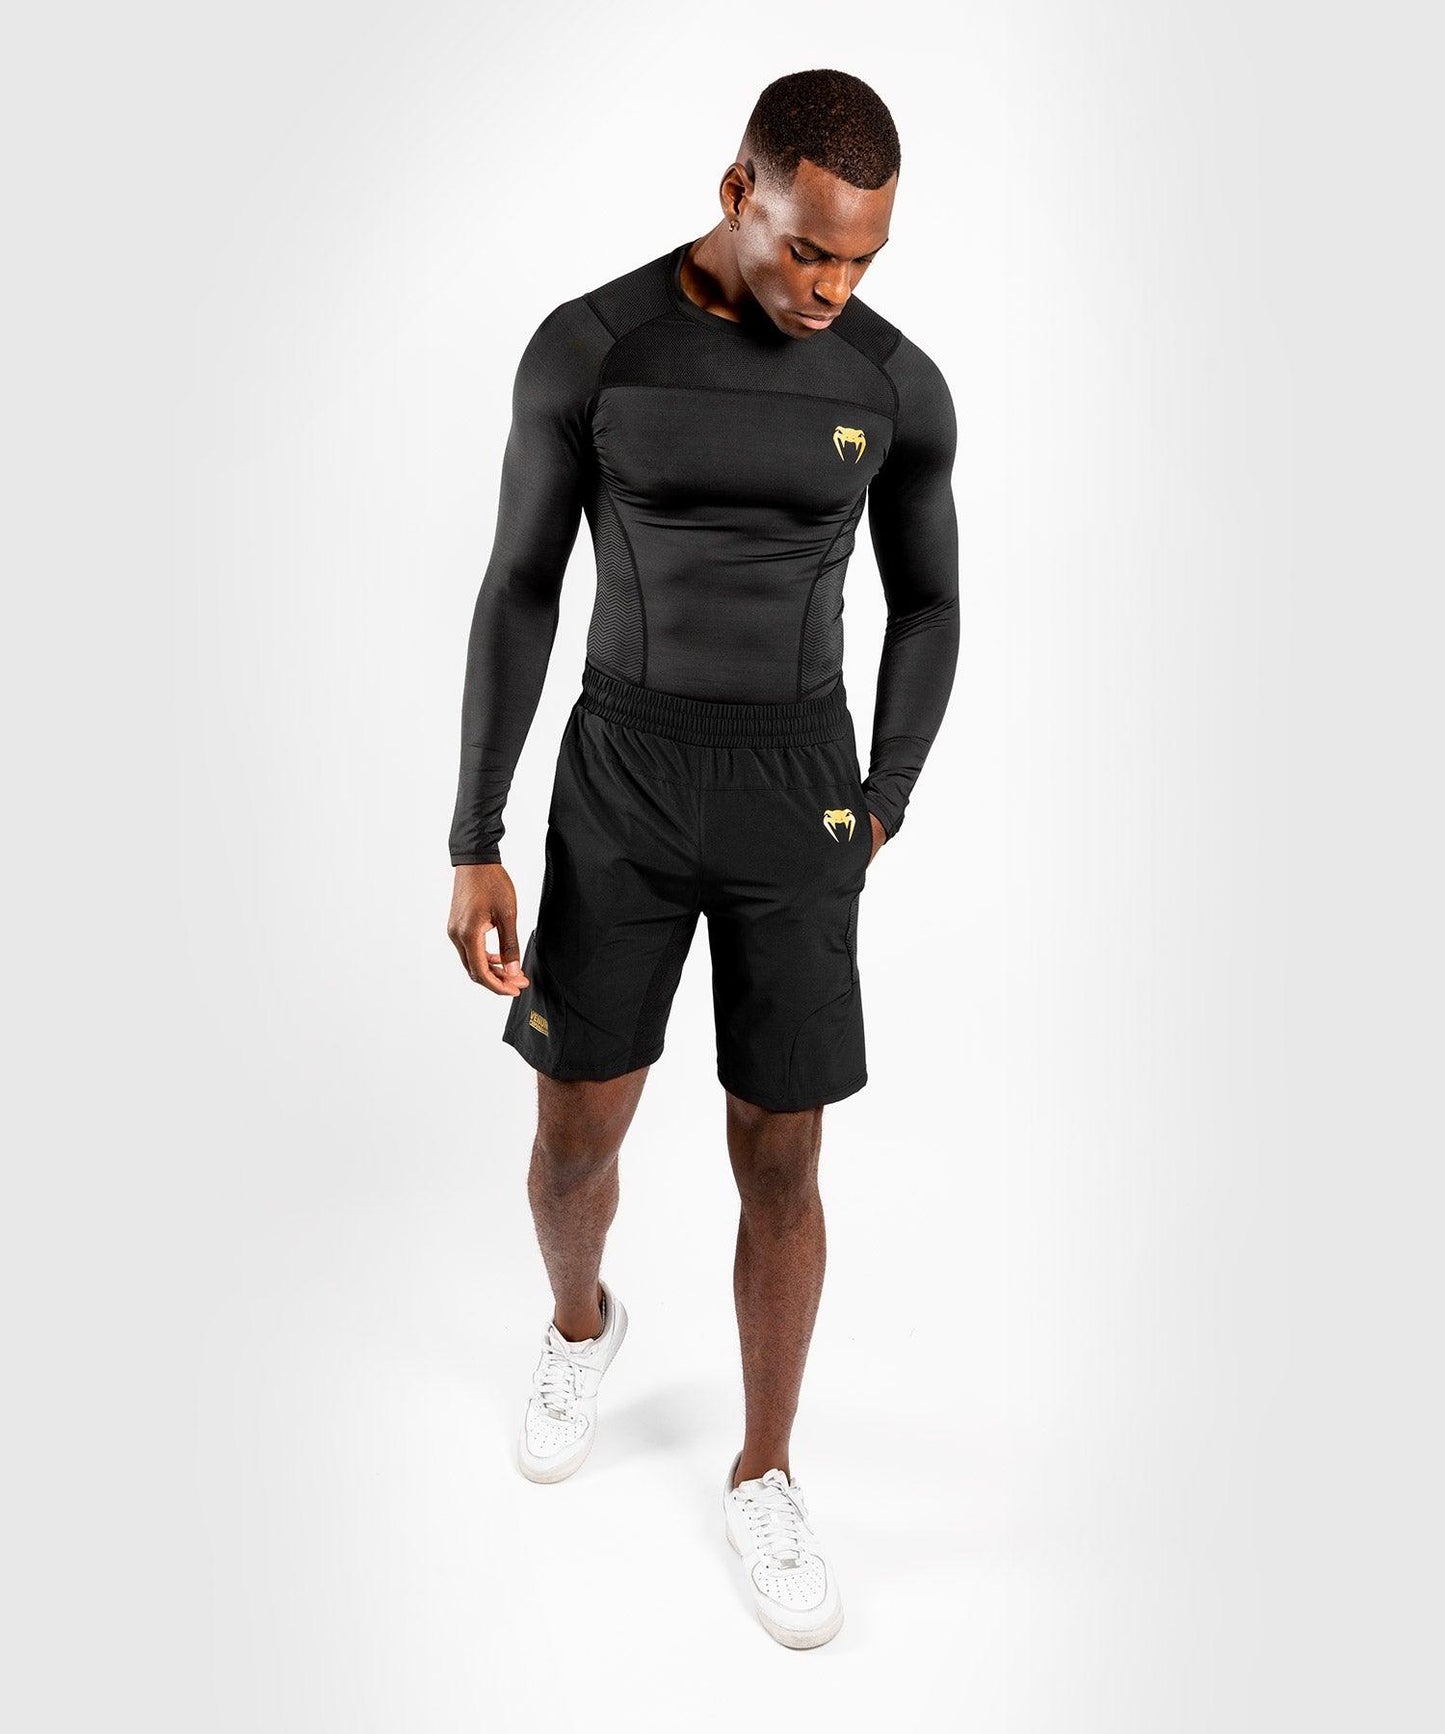 Venum G-Fit Training Shorts - Black/Gold Picture 9